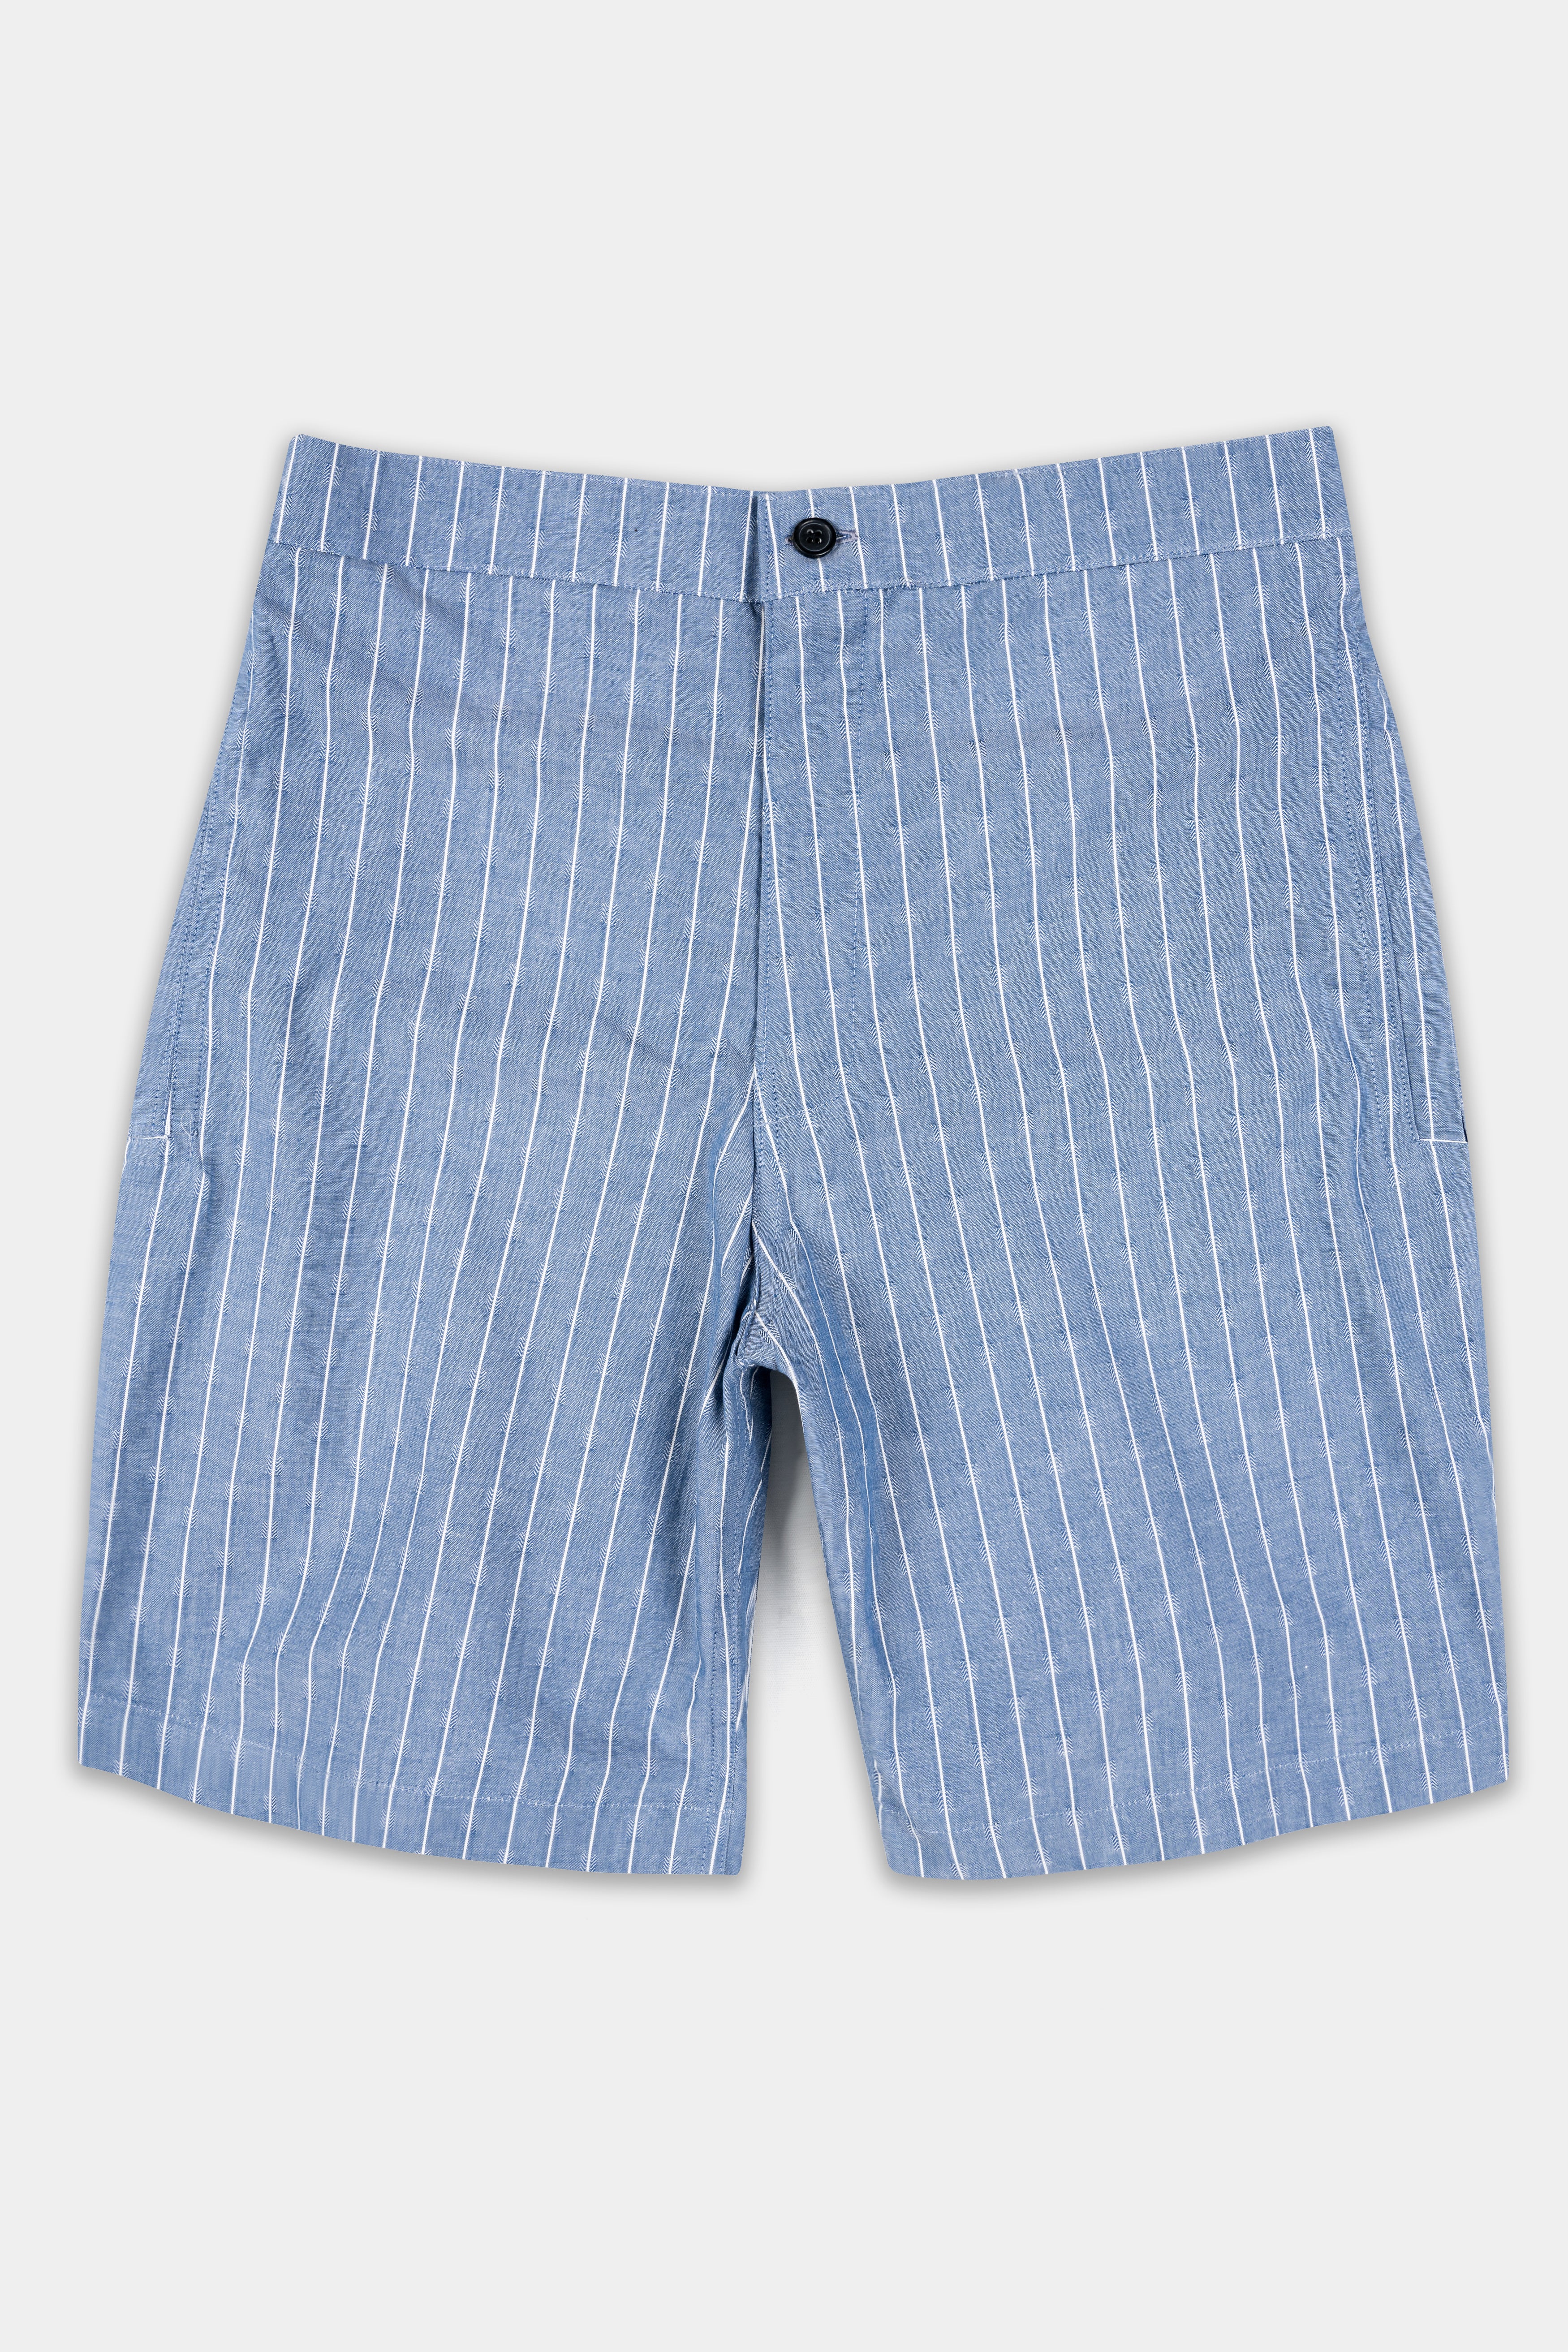 Waikawa Blue and White Striped Dobby Textured Giza Cotton Shorts SR377-28, SR377-30, SR377-32, SR377-34, SR377-36, SR377-38, SR377-40, SR377-42, SR377-44